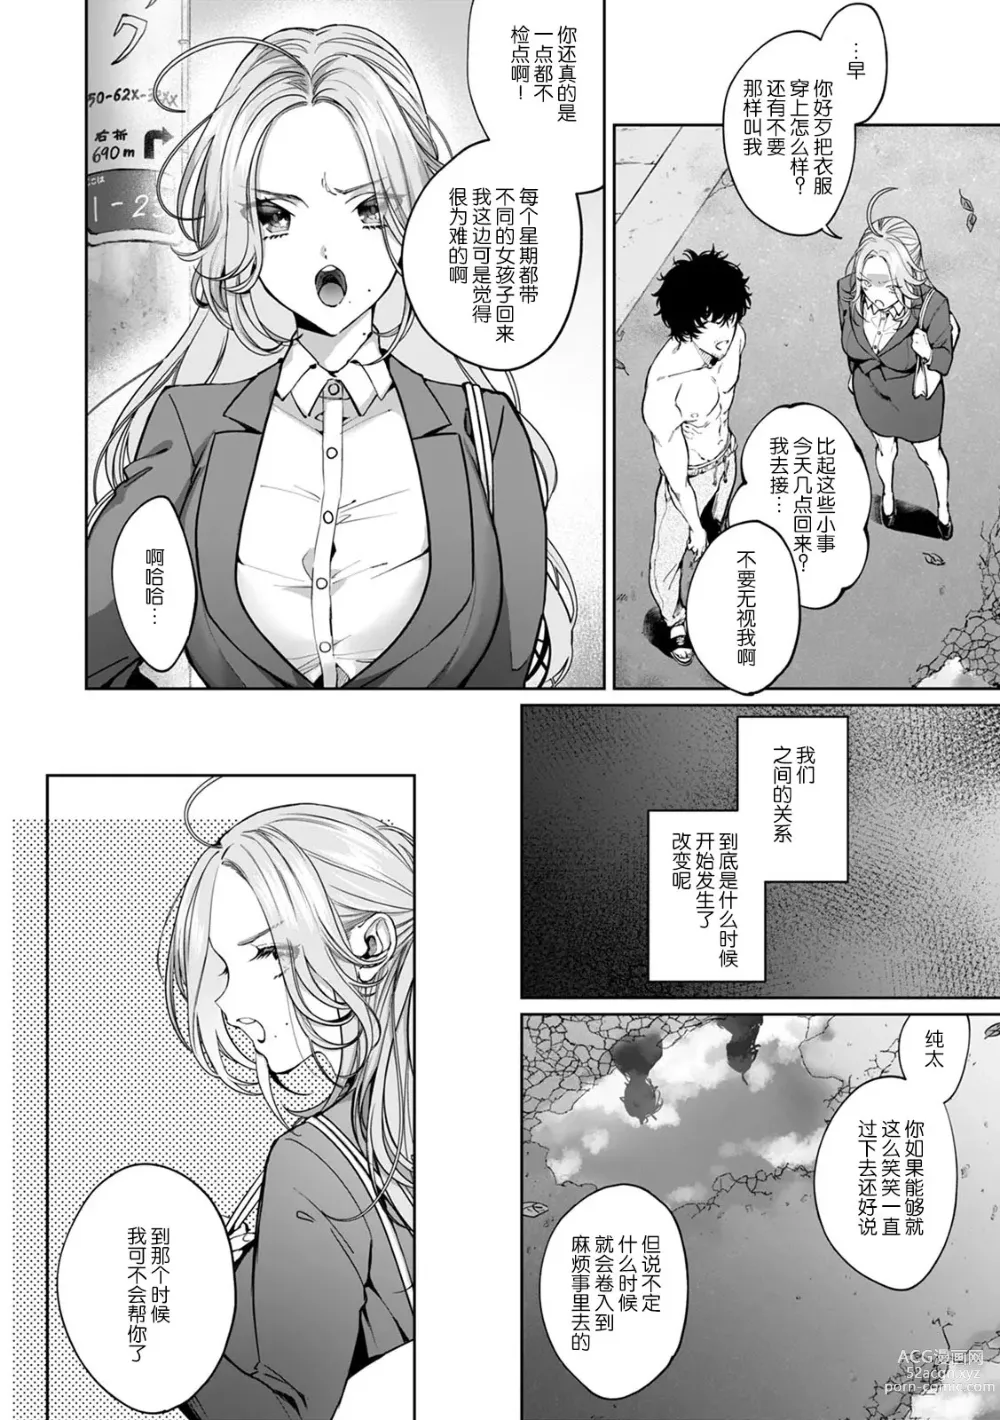 Page 6 of manga 驯幼染认真起来是非常糟糕的溺爱  Ch. 1-6